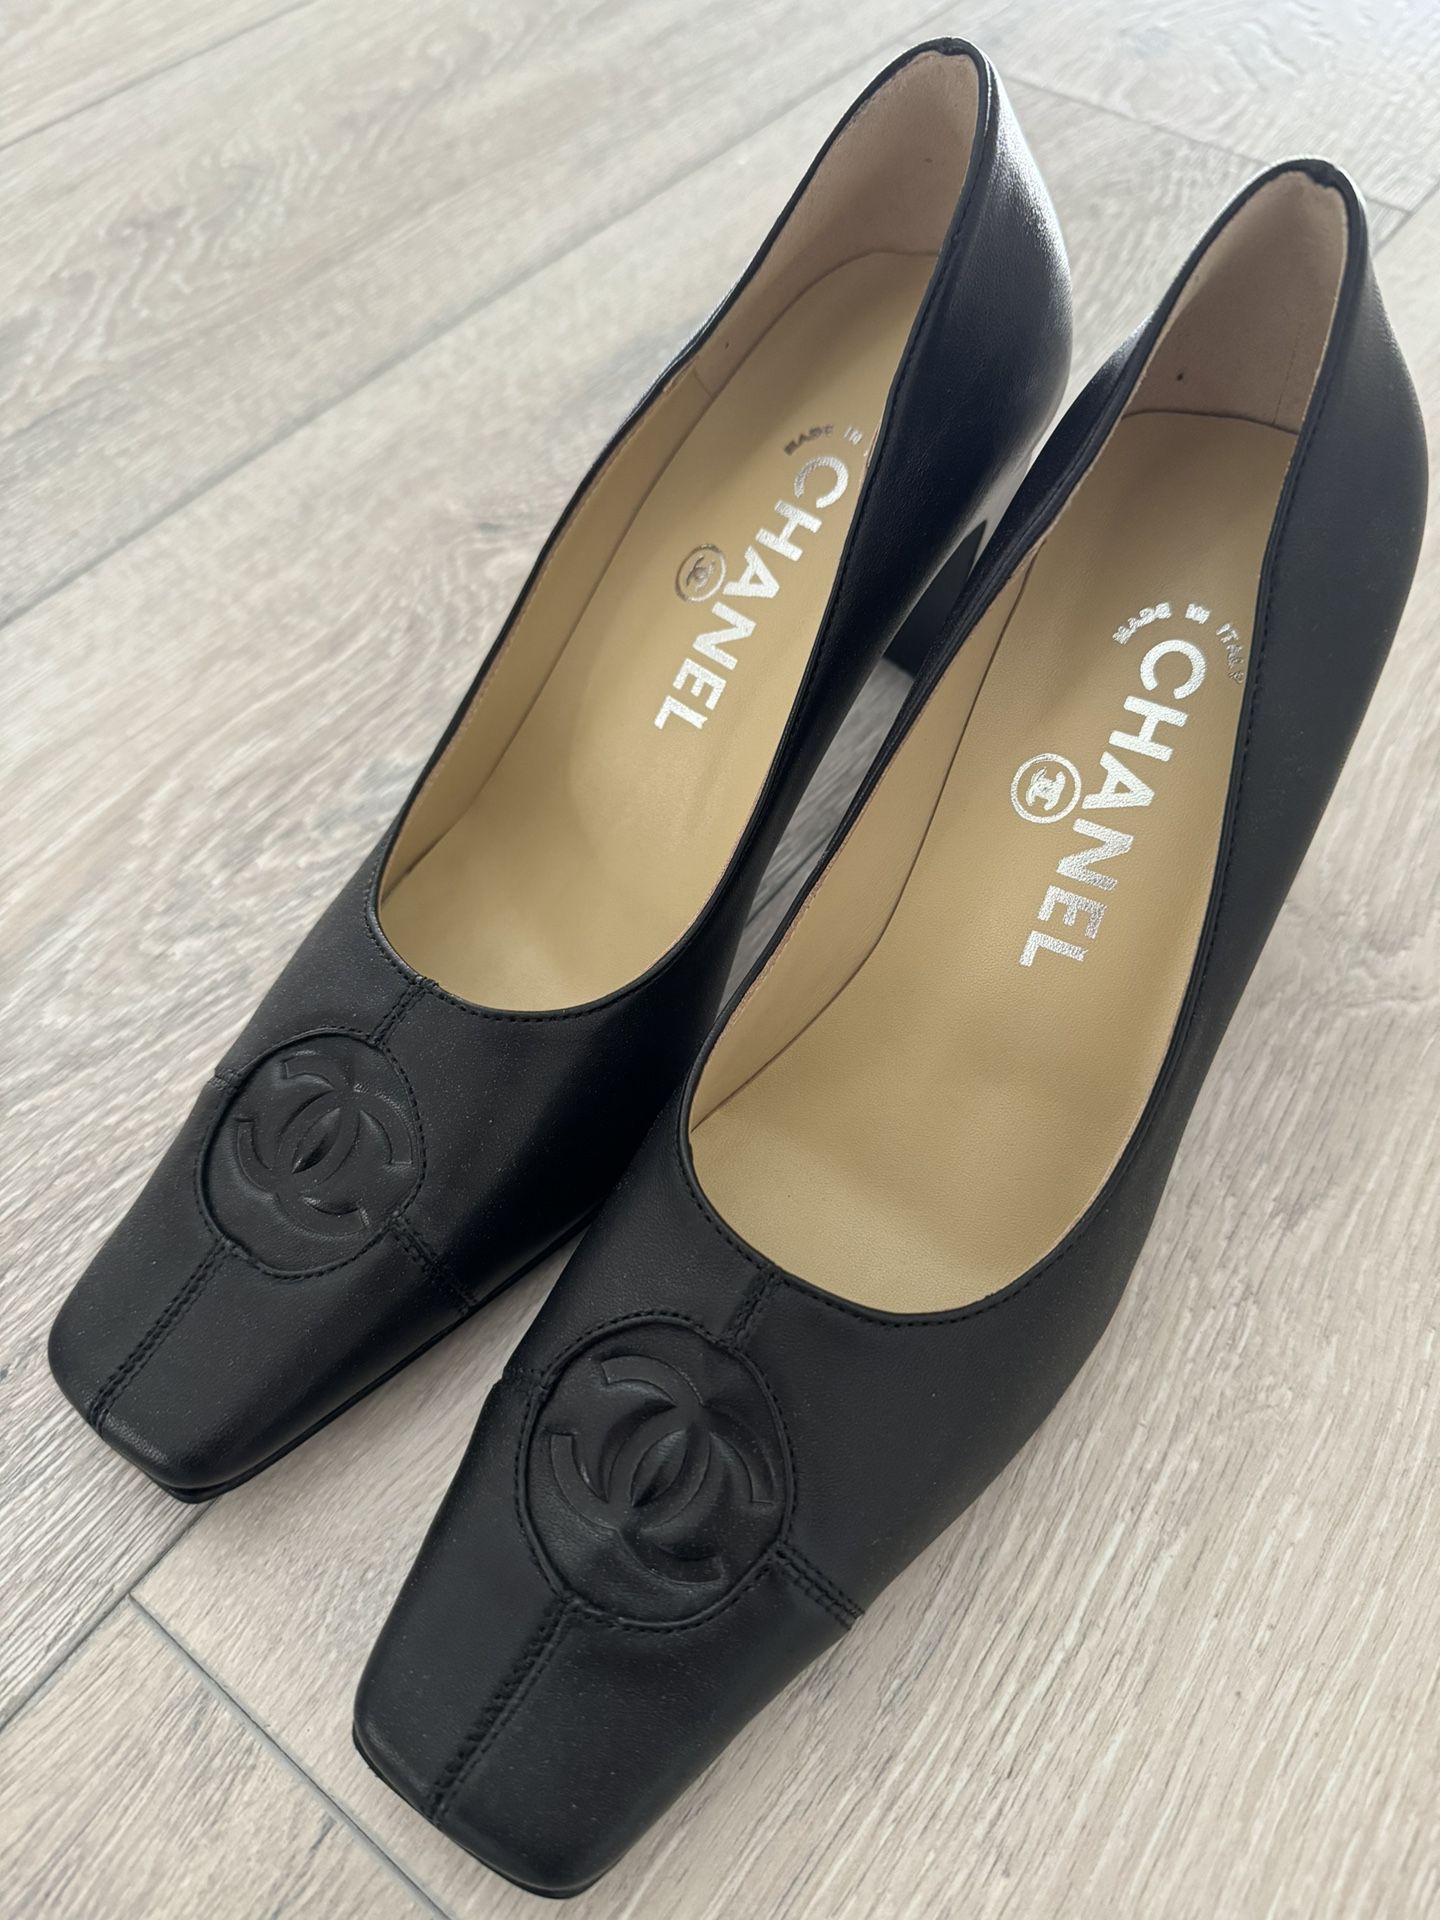 Chanel heels